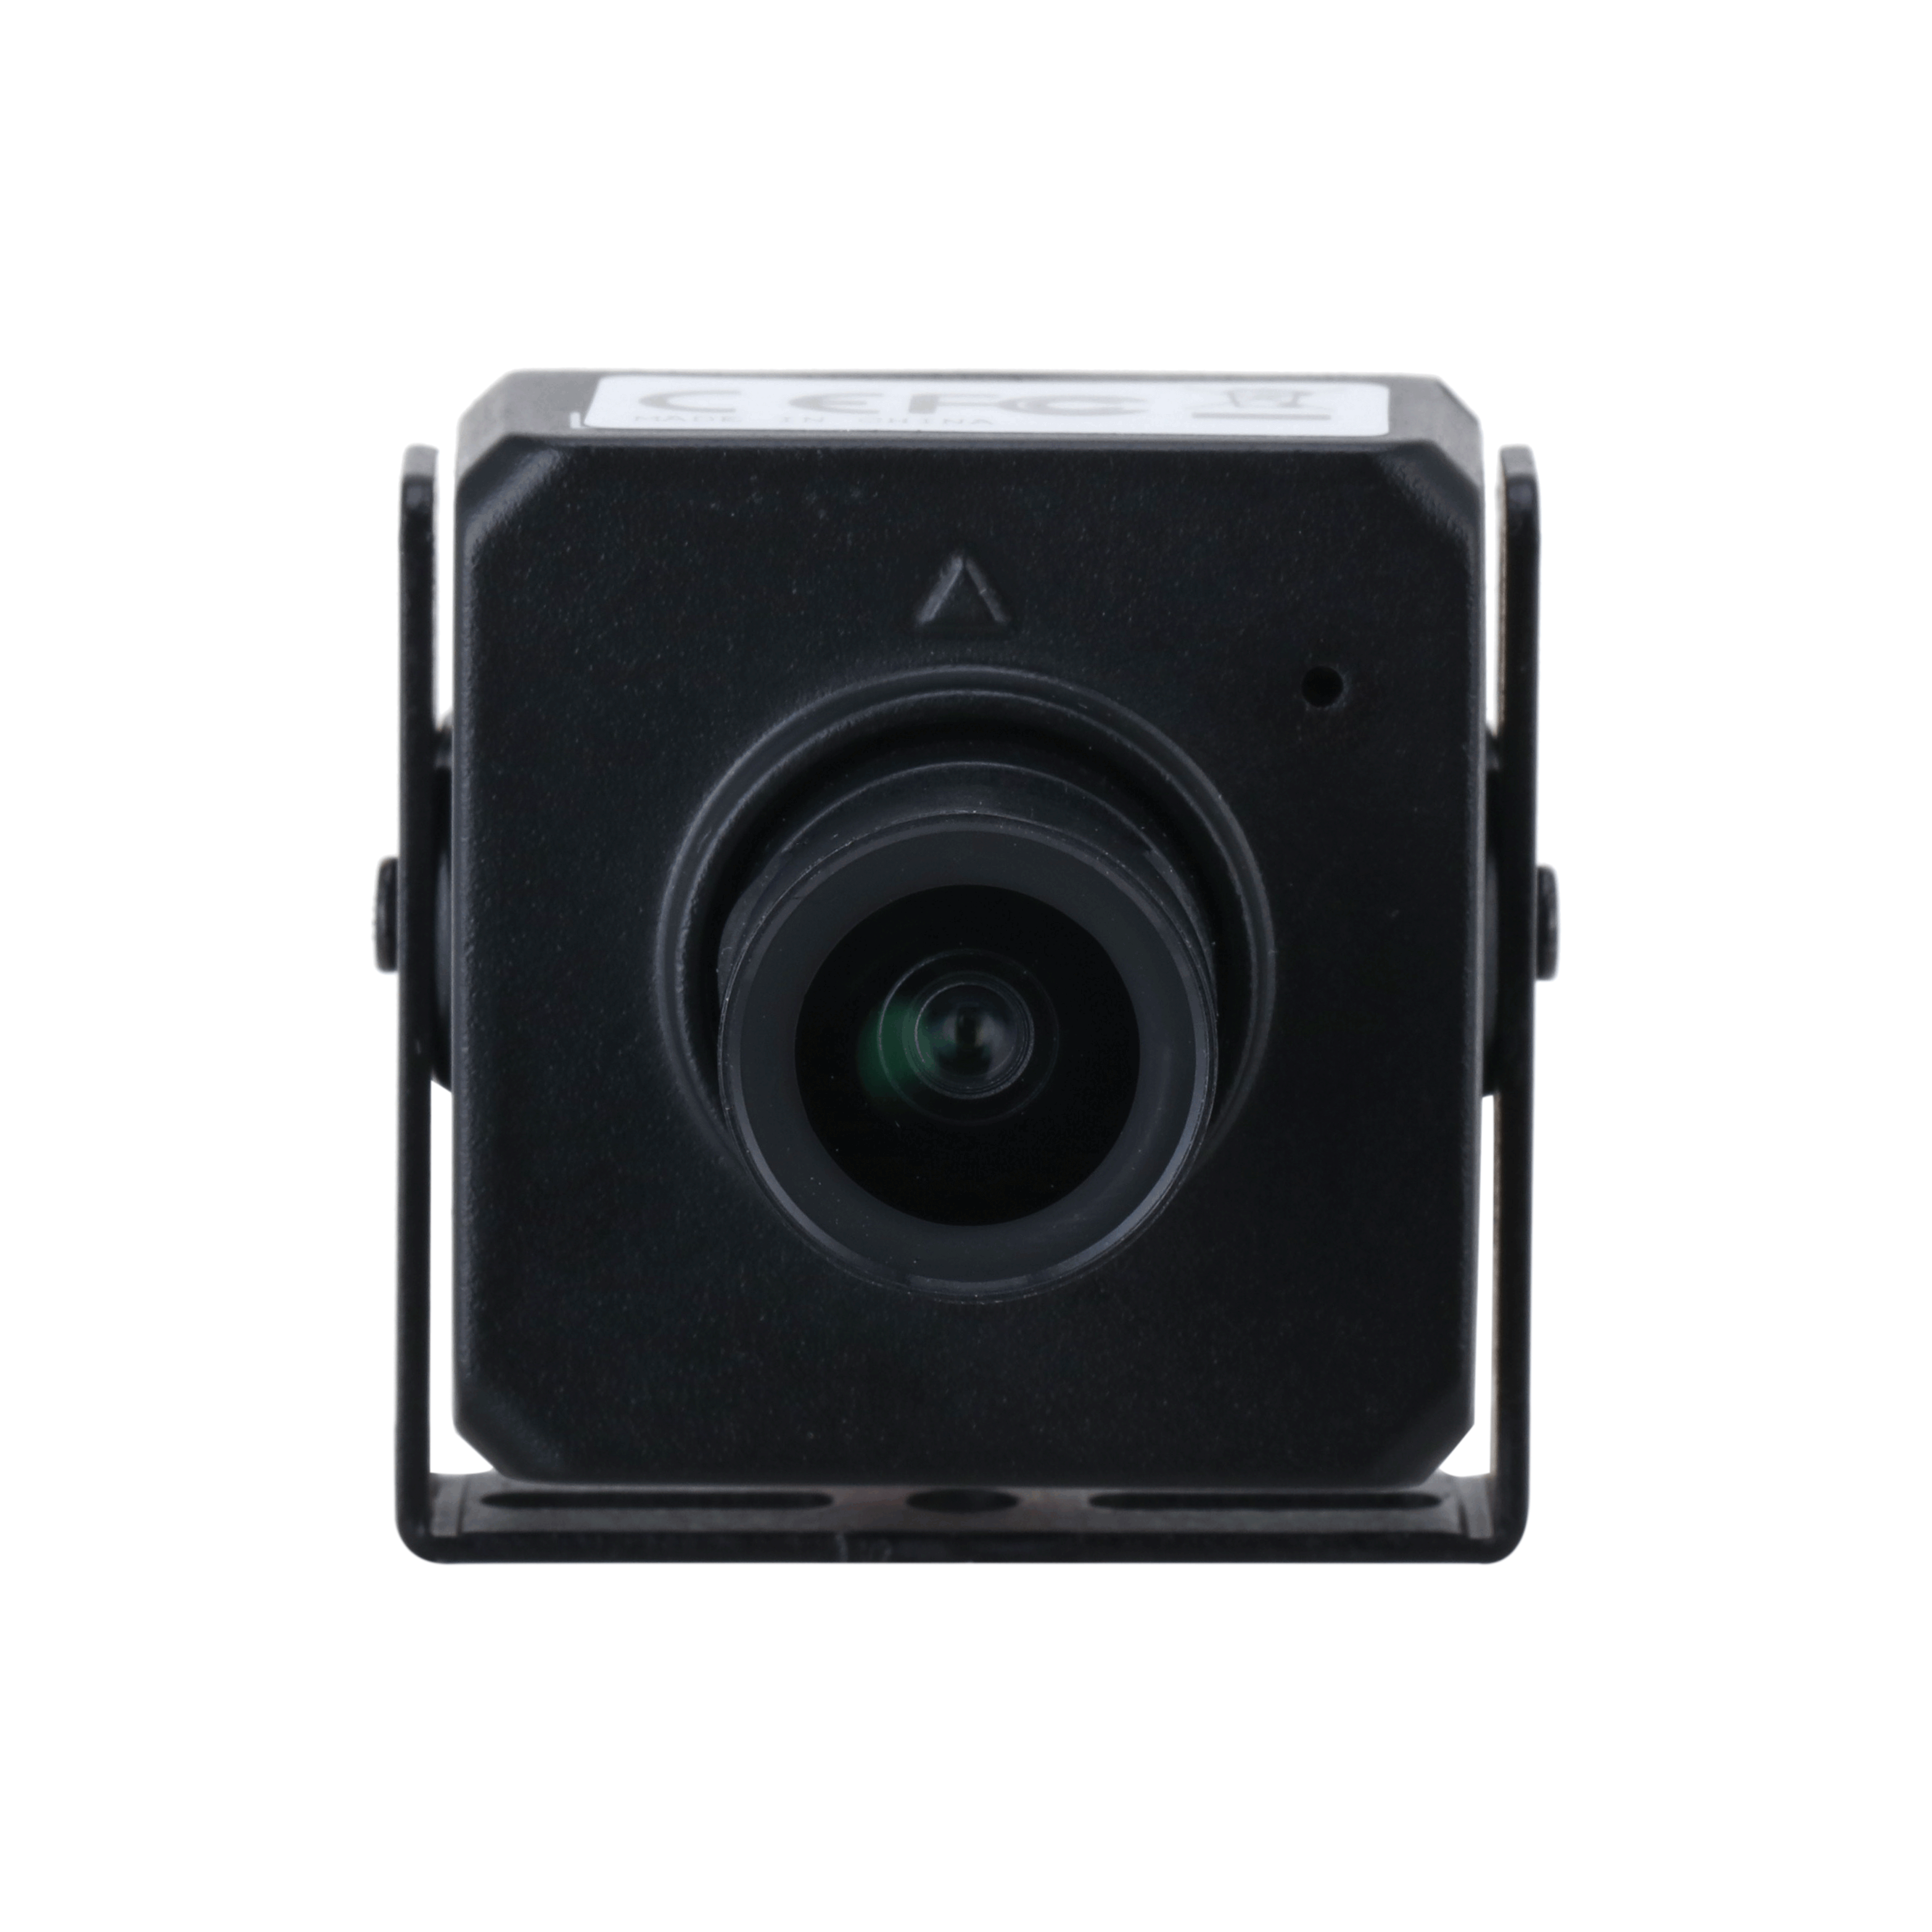 DAHUA IPC-HUM4231S-L4  2MP Fixed-focal Pinhole Network Camera